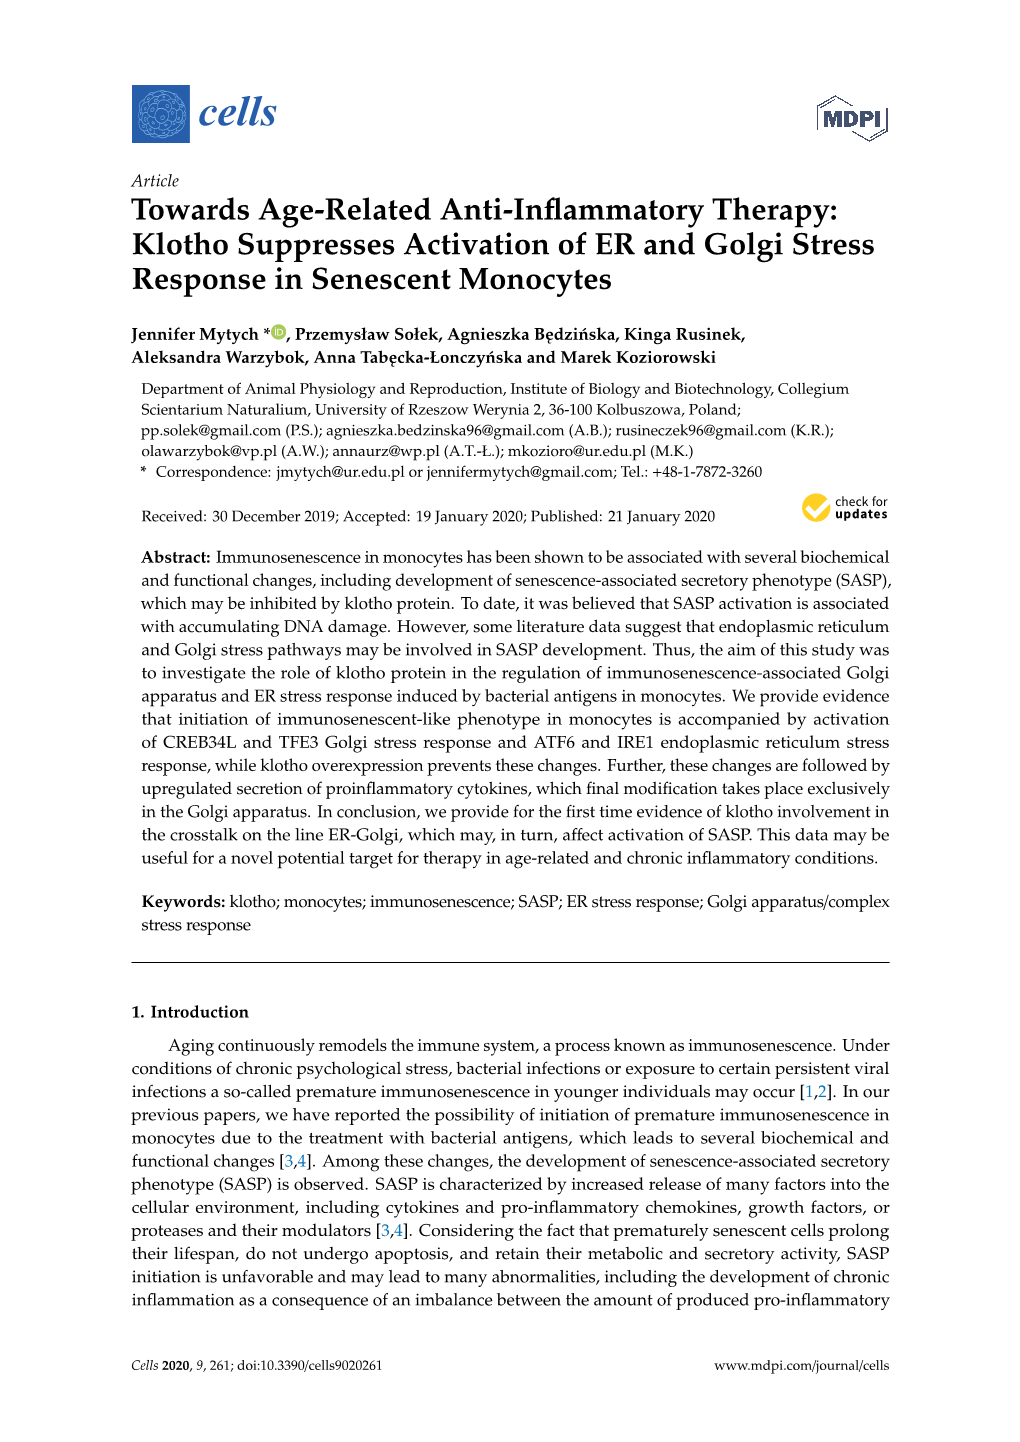 Klotho Suppresses Activation of ER and Golgi Stress Response in Senescent Monocytes